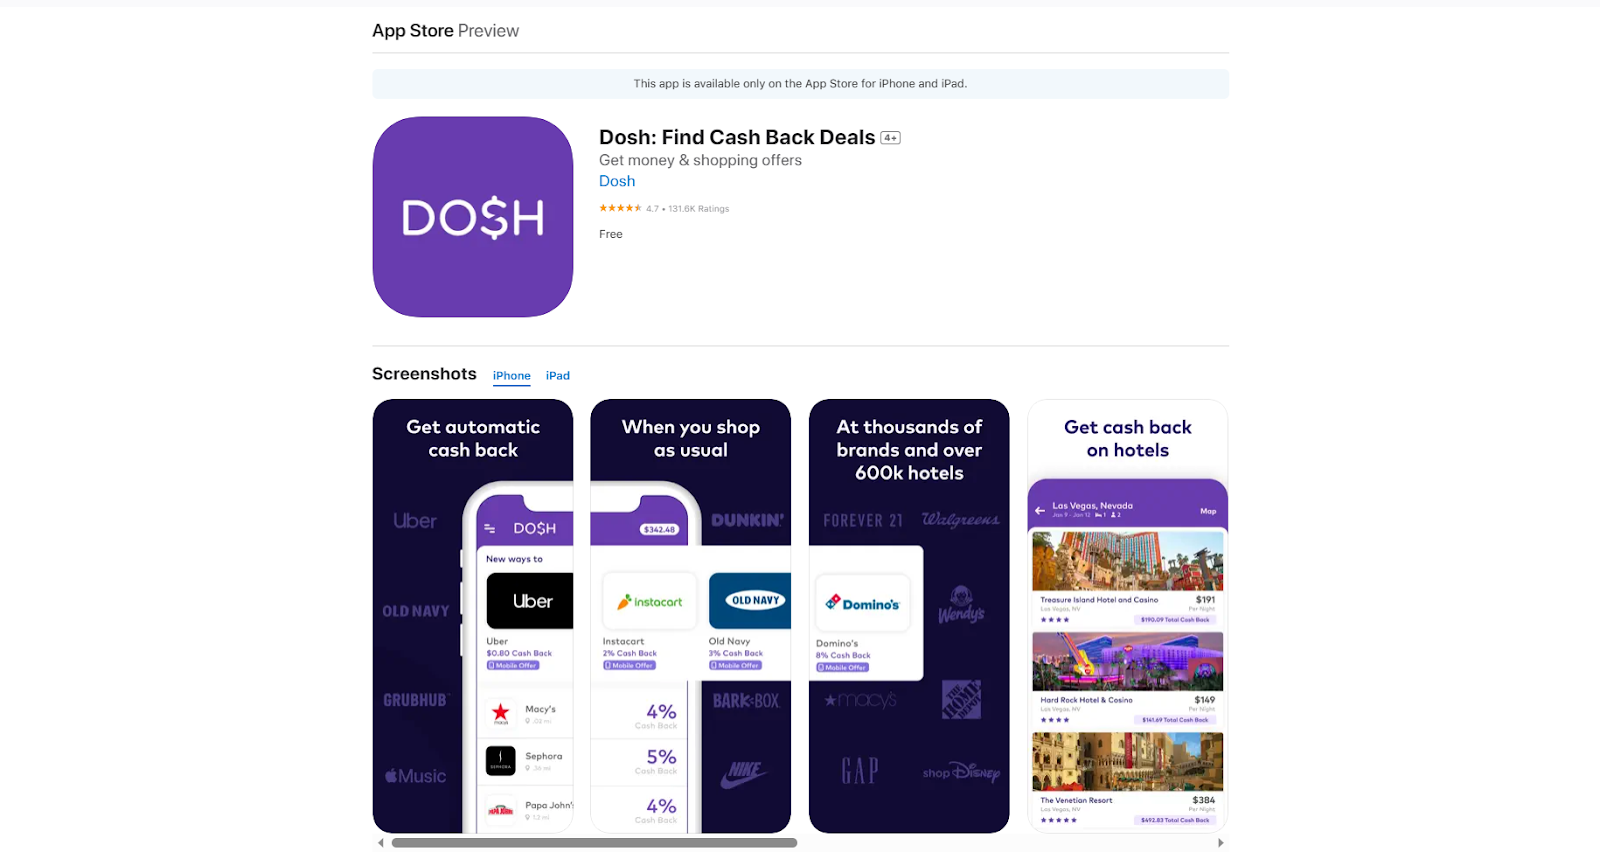 Dosh Referral Code YOREOYSTER + Up To $11 Bonus